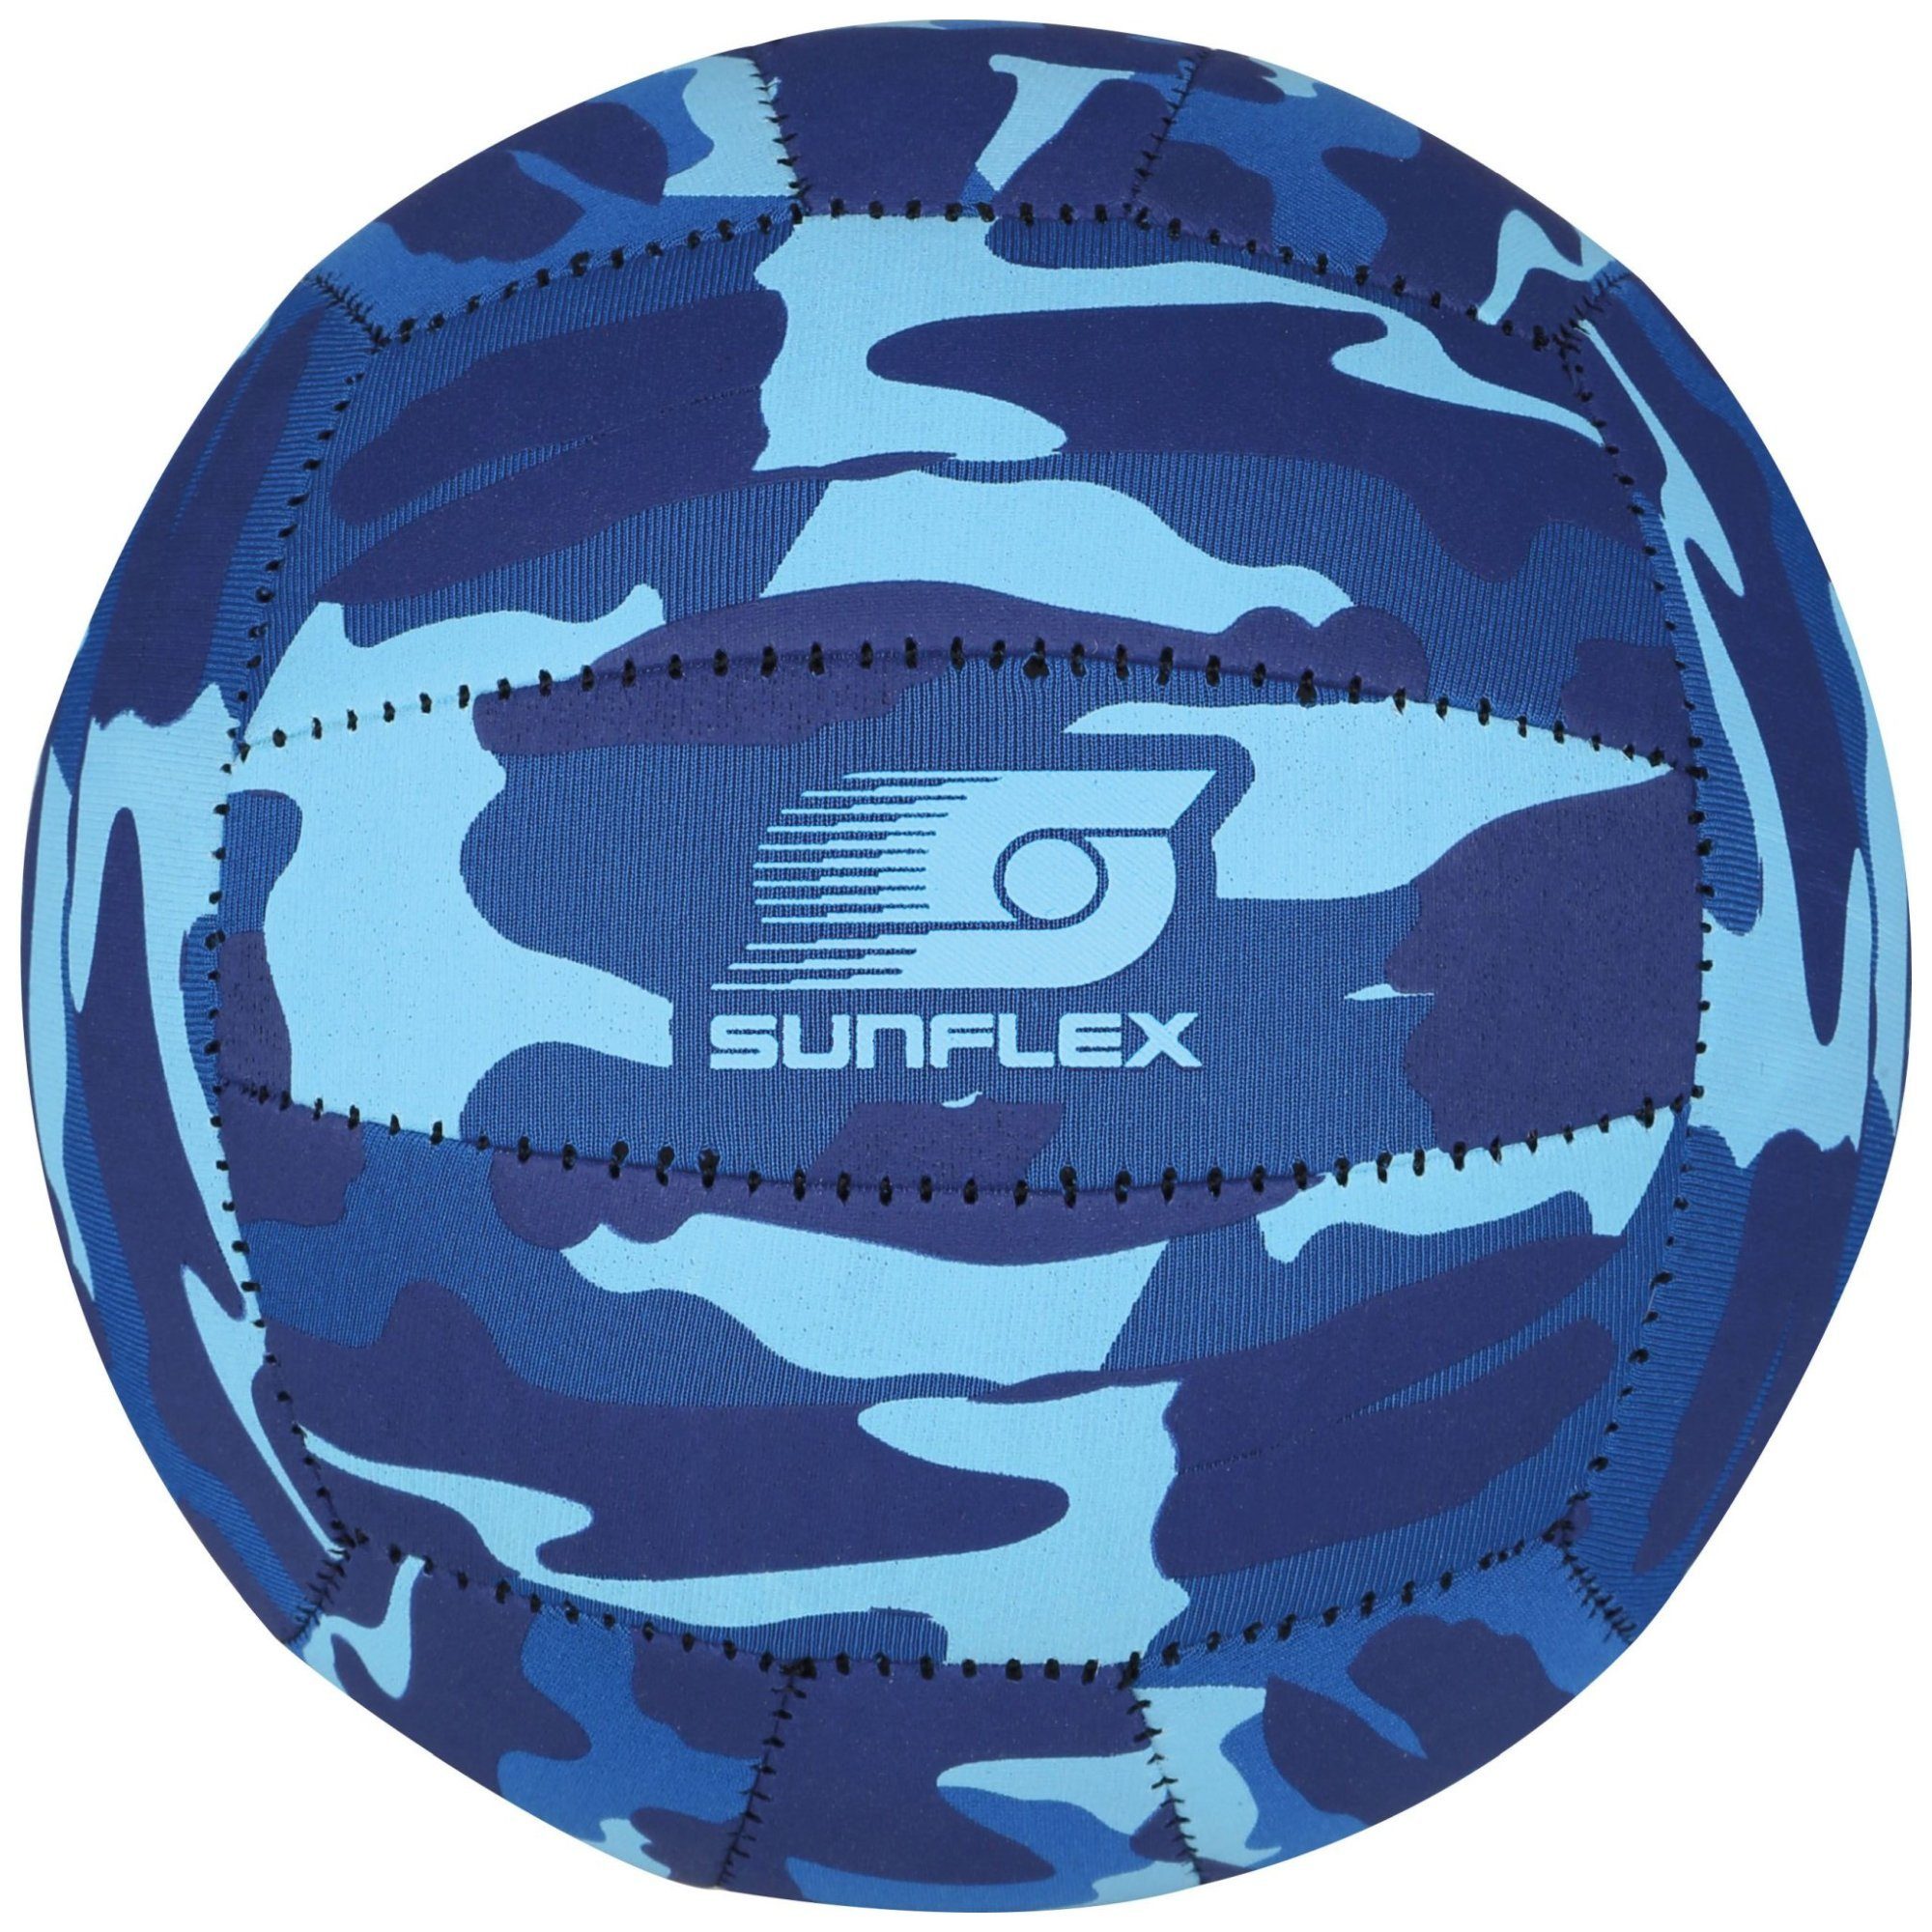 3 und Size sunflex Sunflex Funball blau Camo Beach- Beachsoccerball